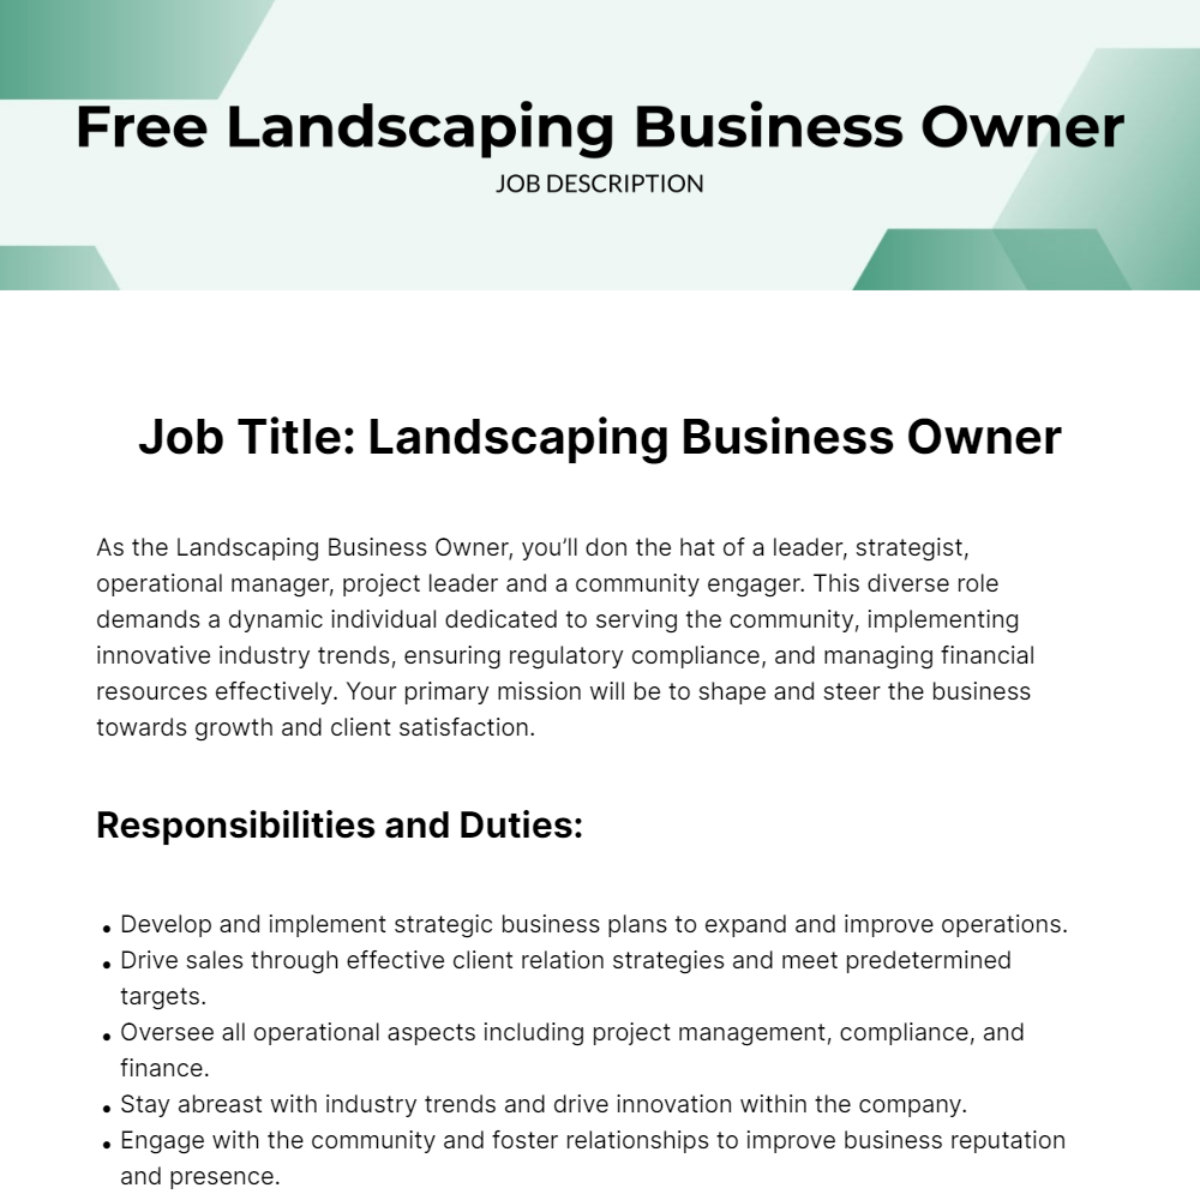 Free Landscaping Business Owner Job Description Template